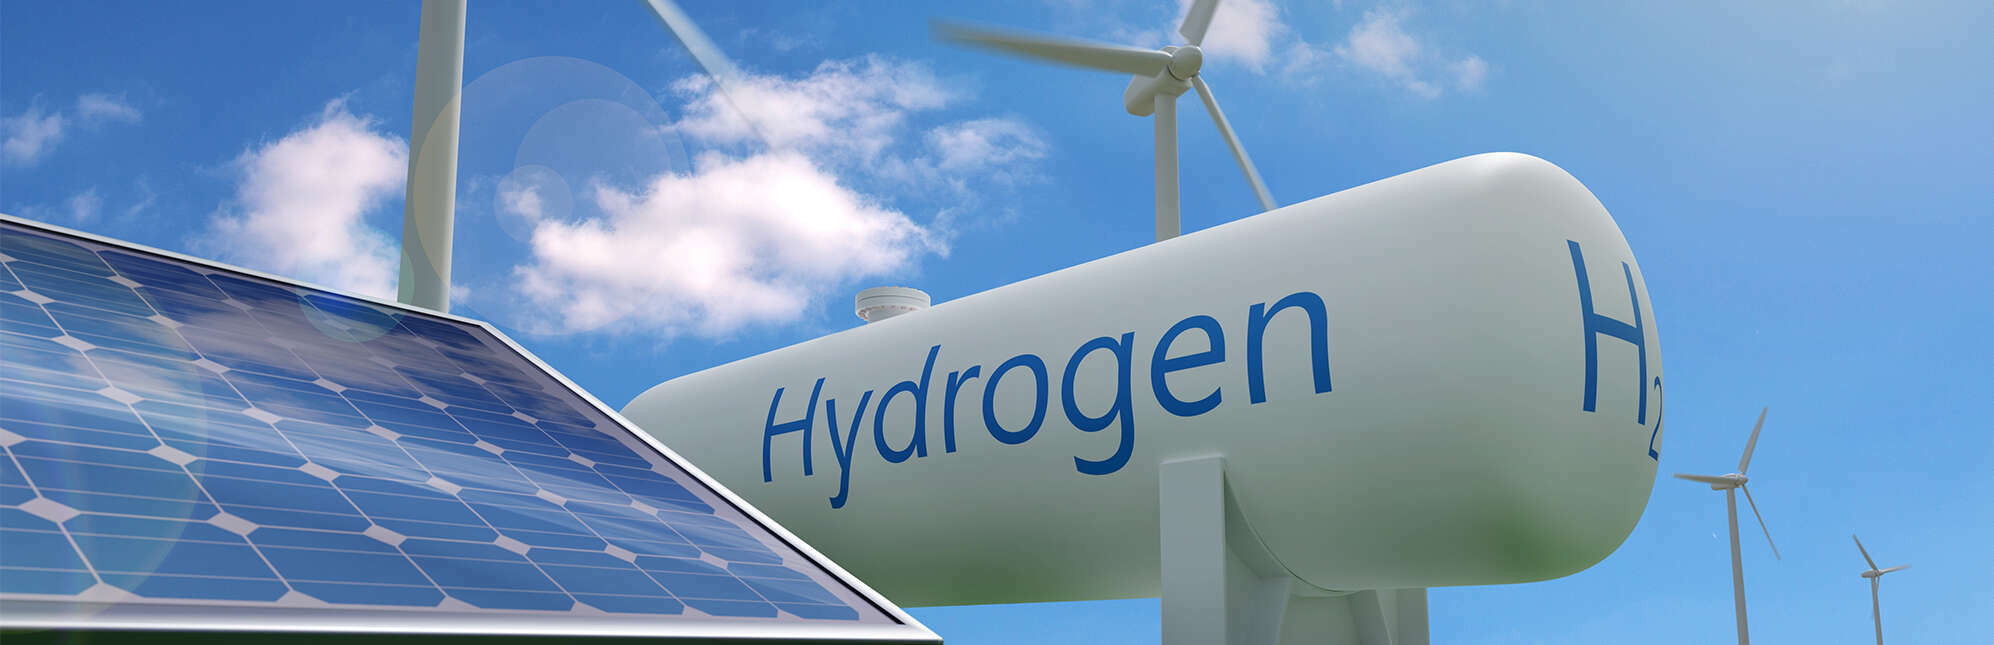 Ecoclean Hydrogen Technology